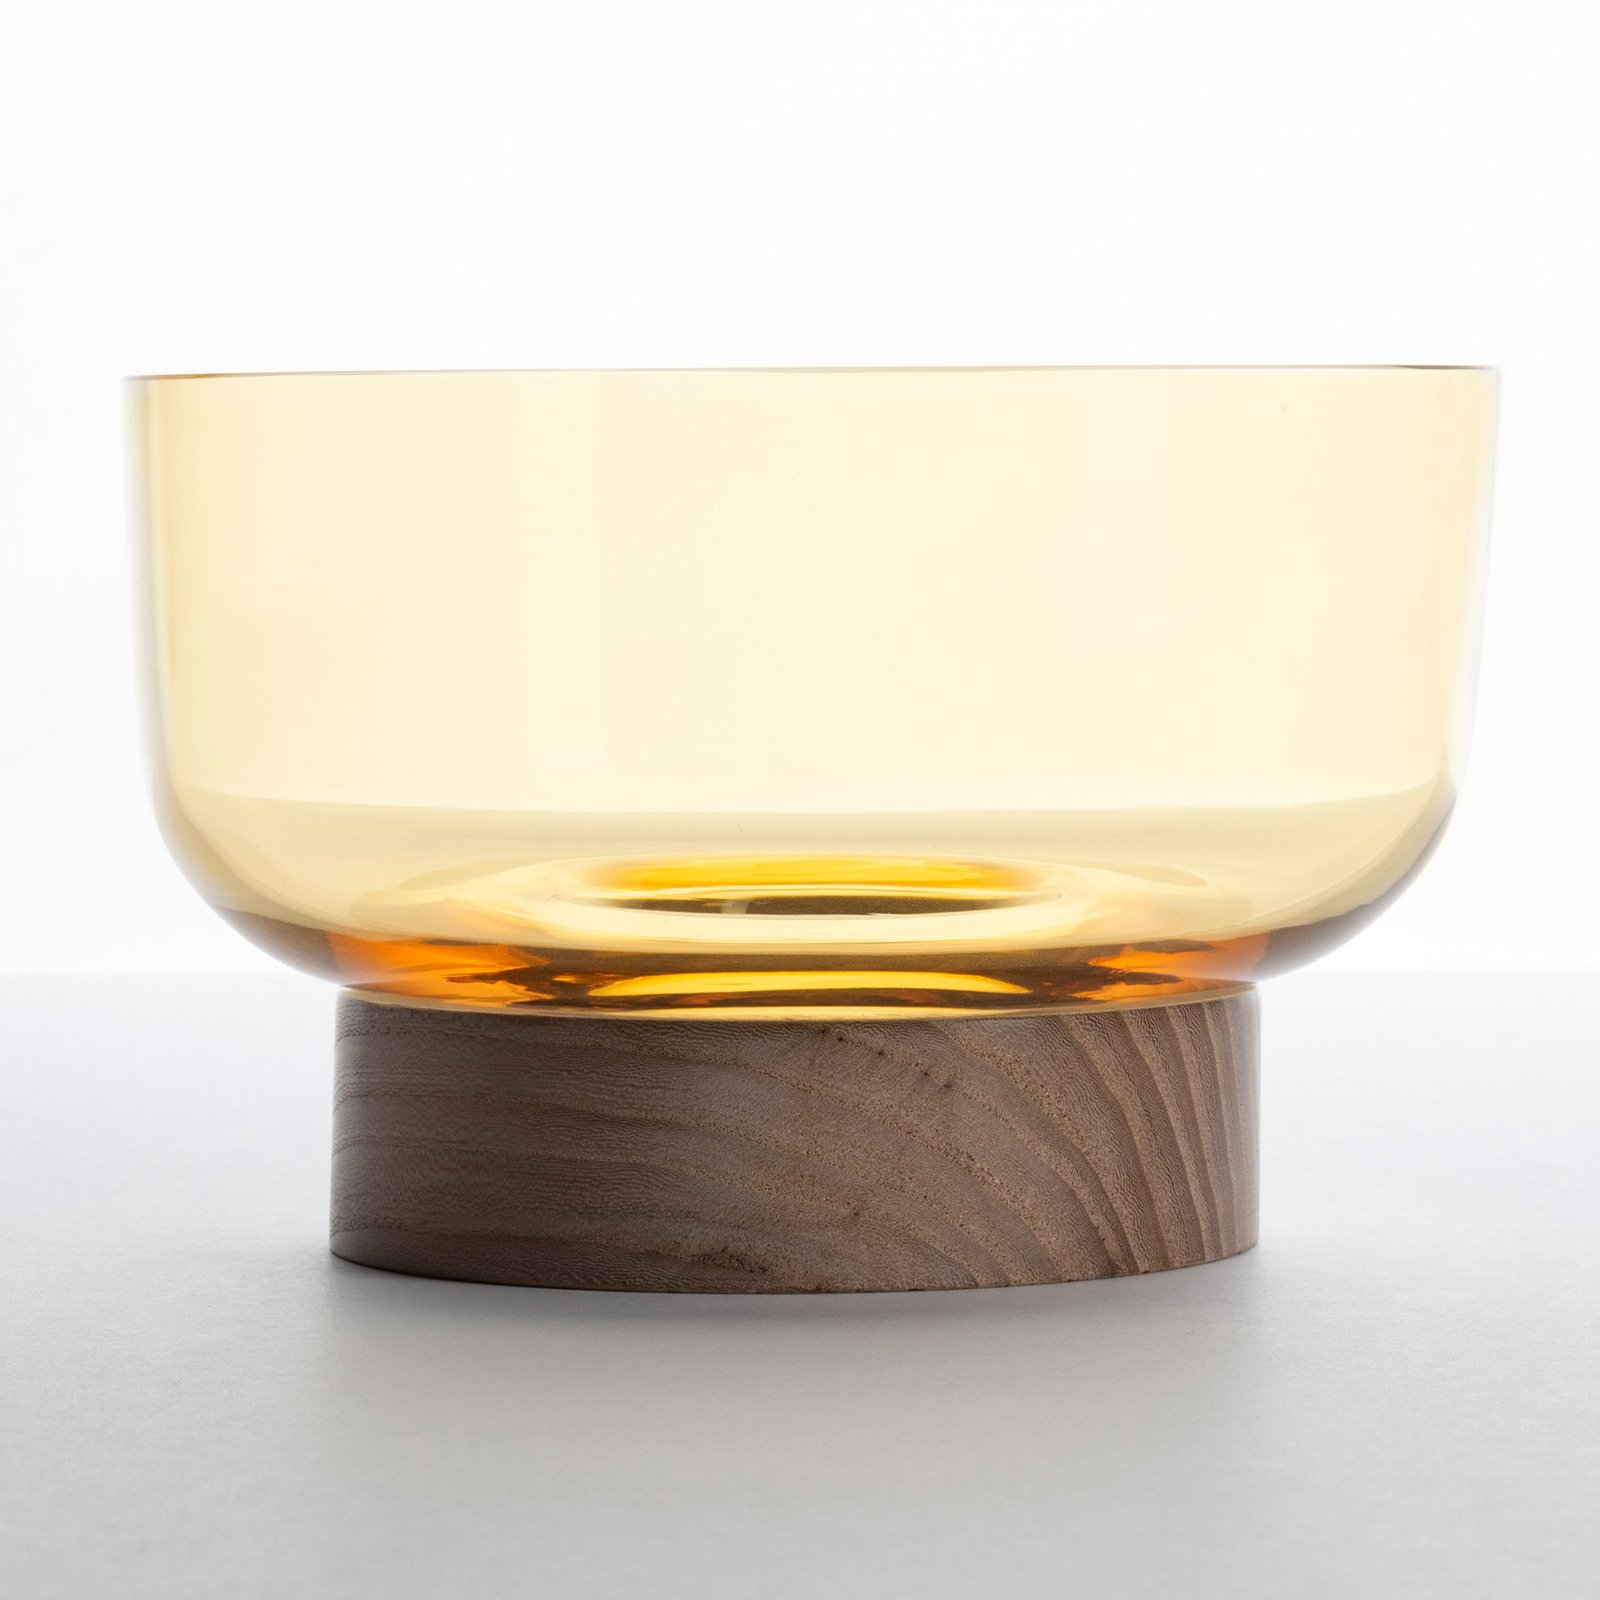 Artemide Bontà glass bowl with wooden base, yellow